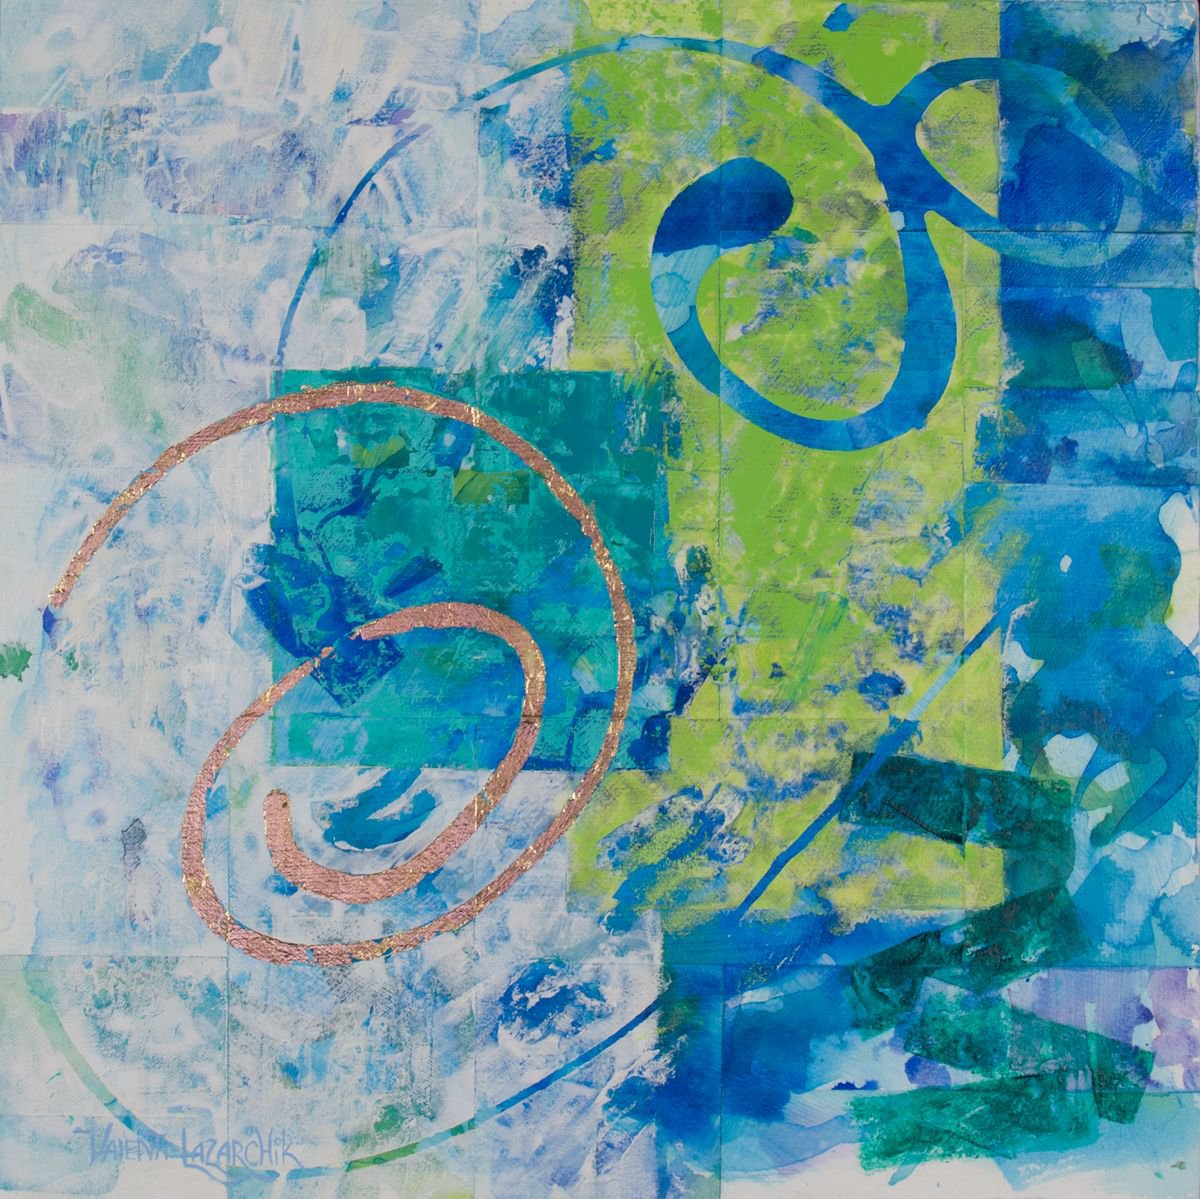 Quartet 212 (20 x 20) by Gina Valenti-Lazarchik